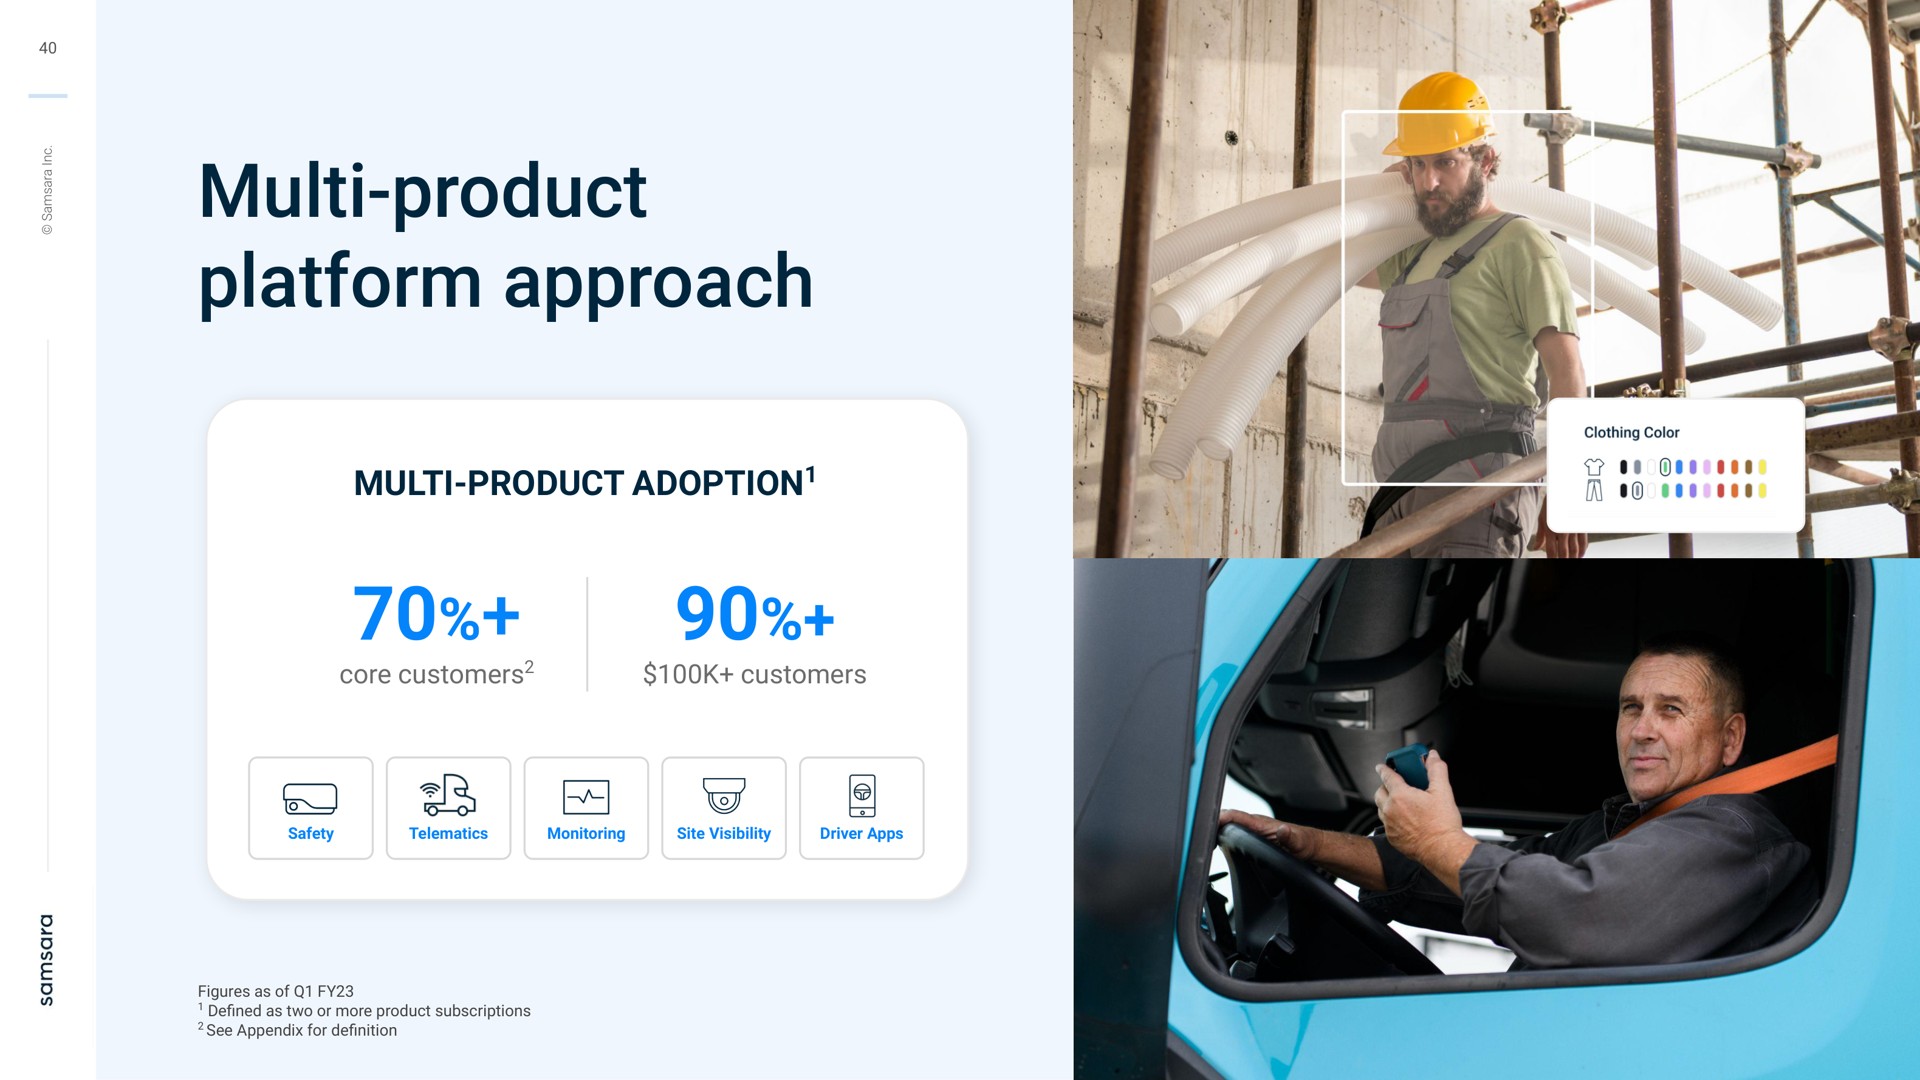 product platform approach product adoption core customers customers pic | Samsara